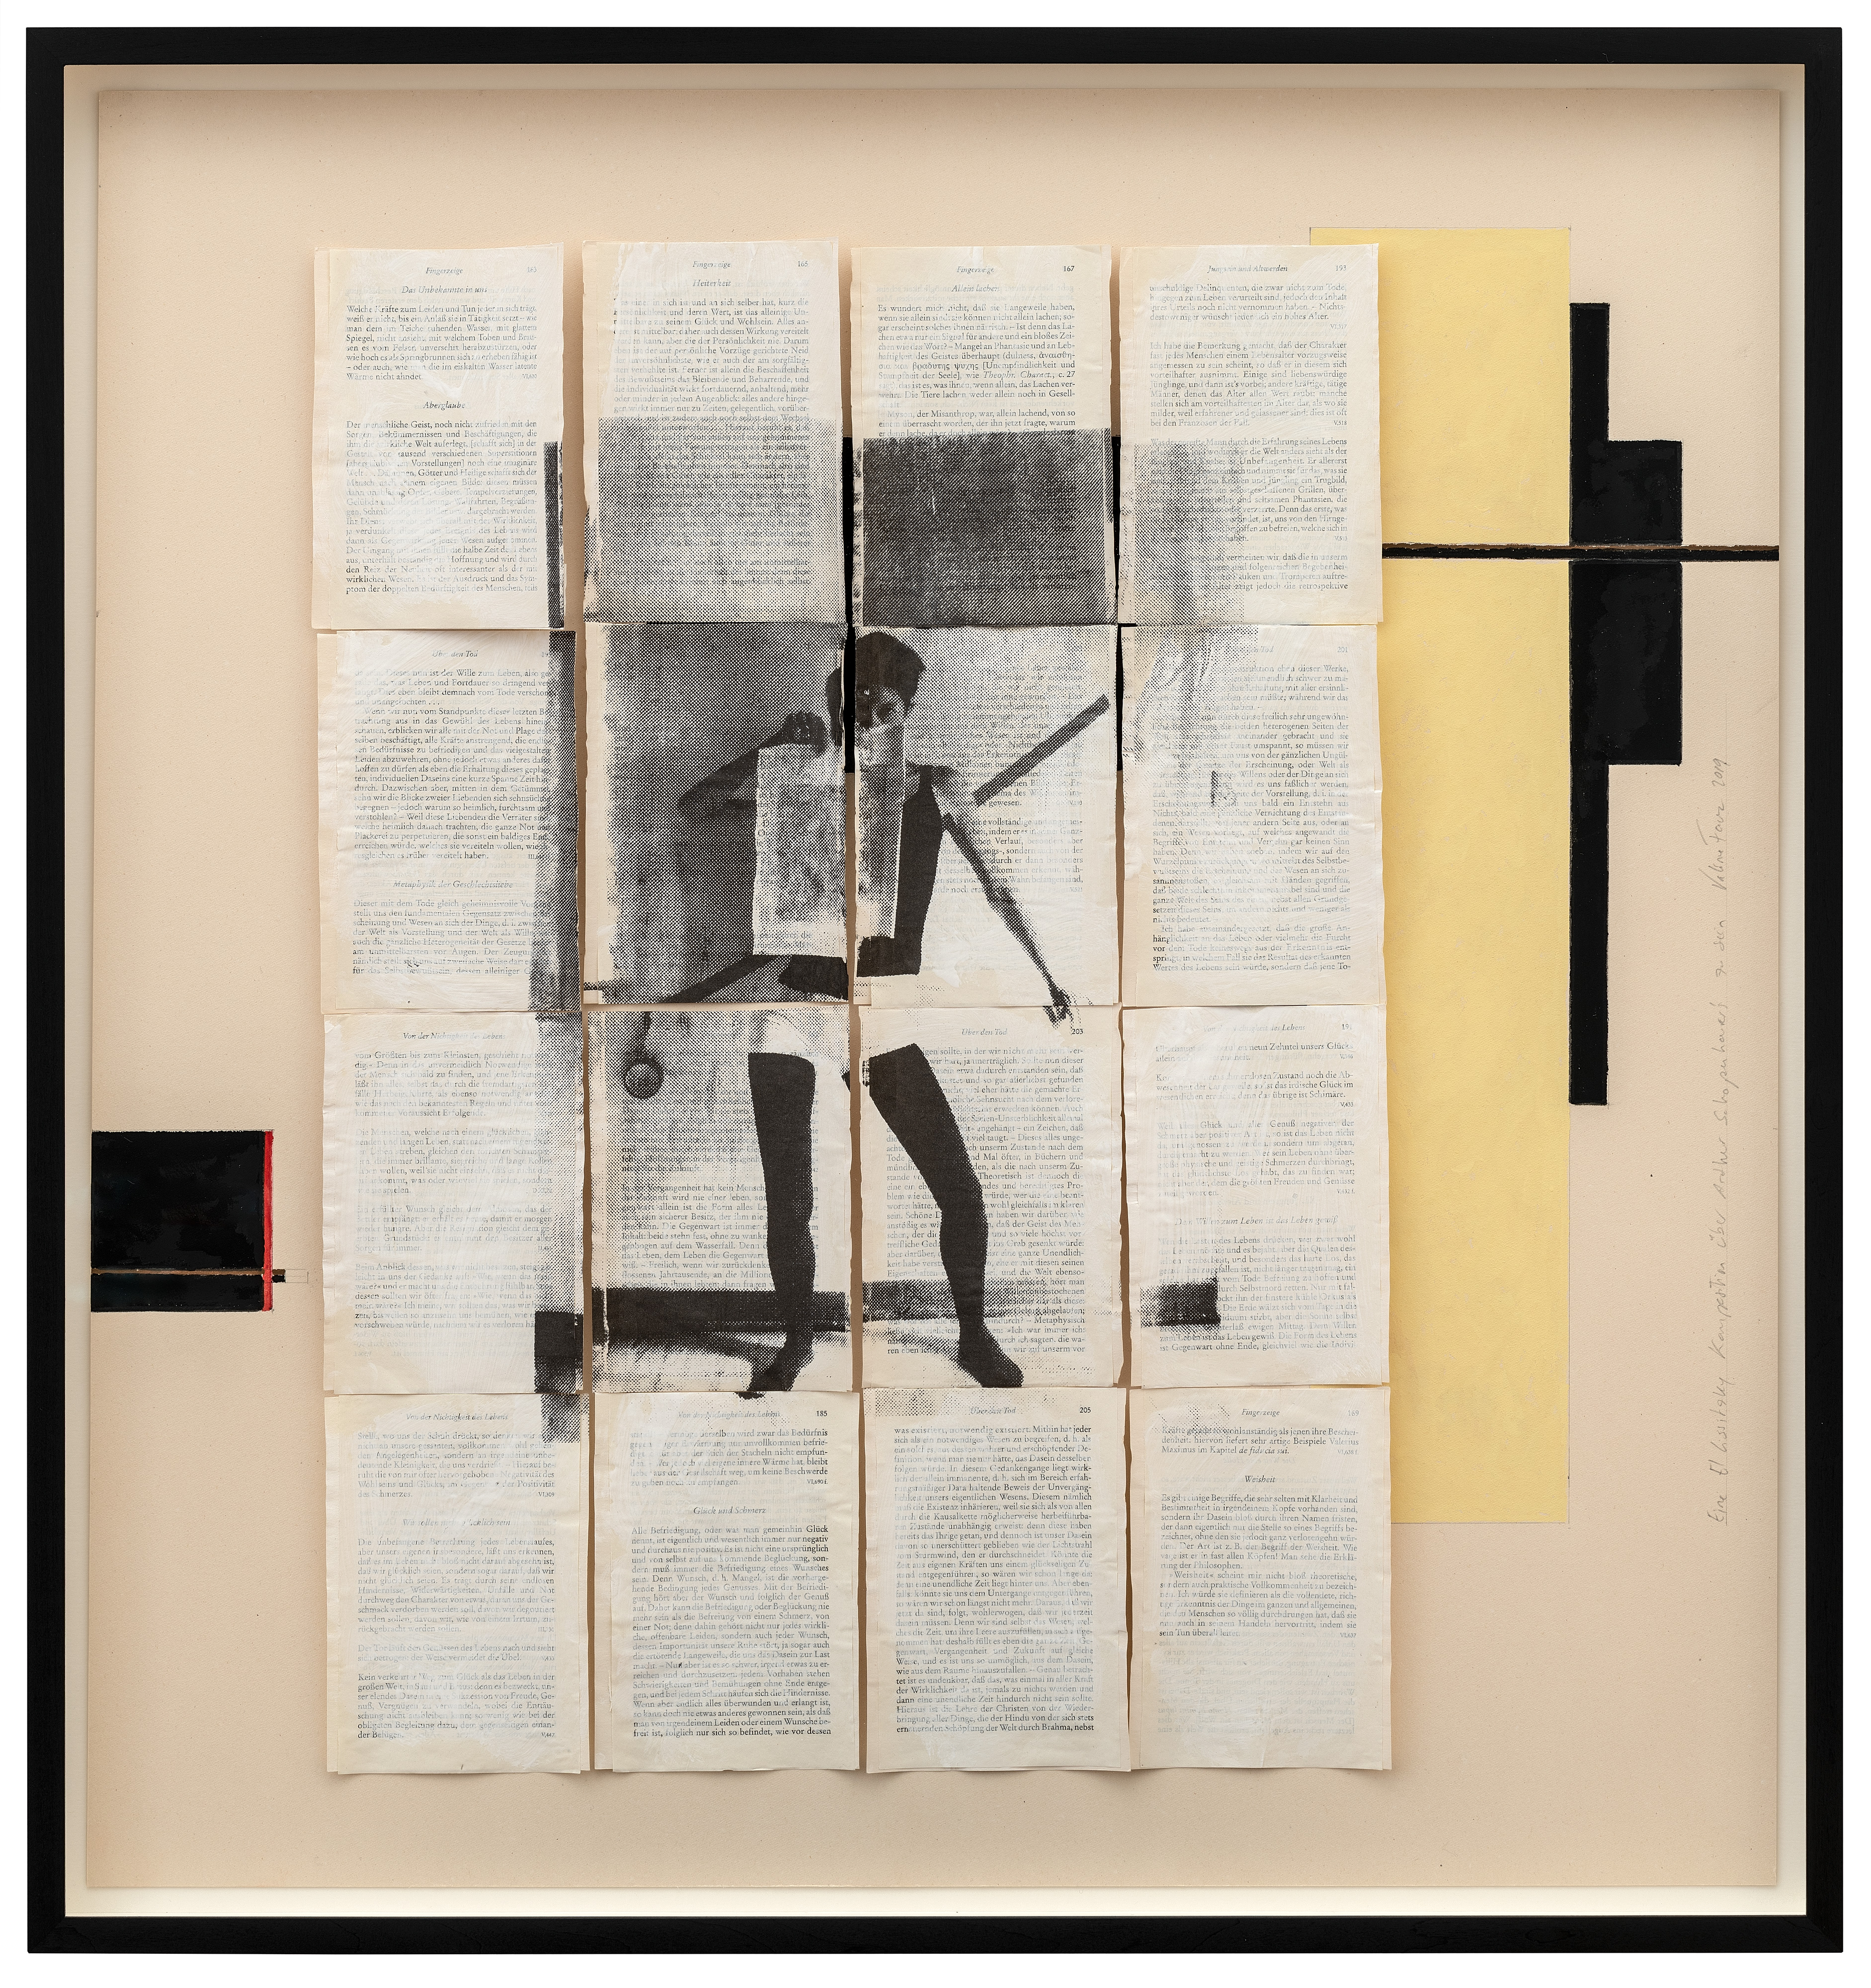 Galerie Barbara Thumm \ Valérie Favre: An El Lissitzky Composition on Arthur Schopenhaur’s About Being (VFa-19-0001) \ An El Lissitzky Composition on Arthur Schopenhaur&#8217;s About Being (2019)